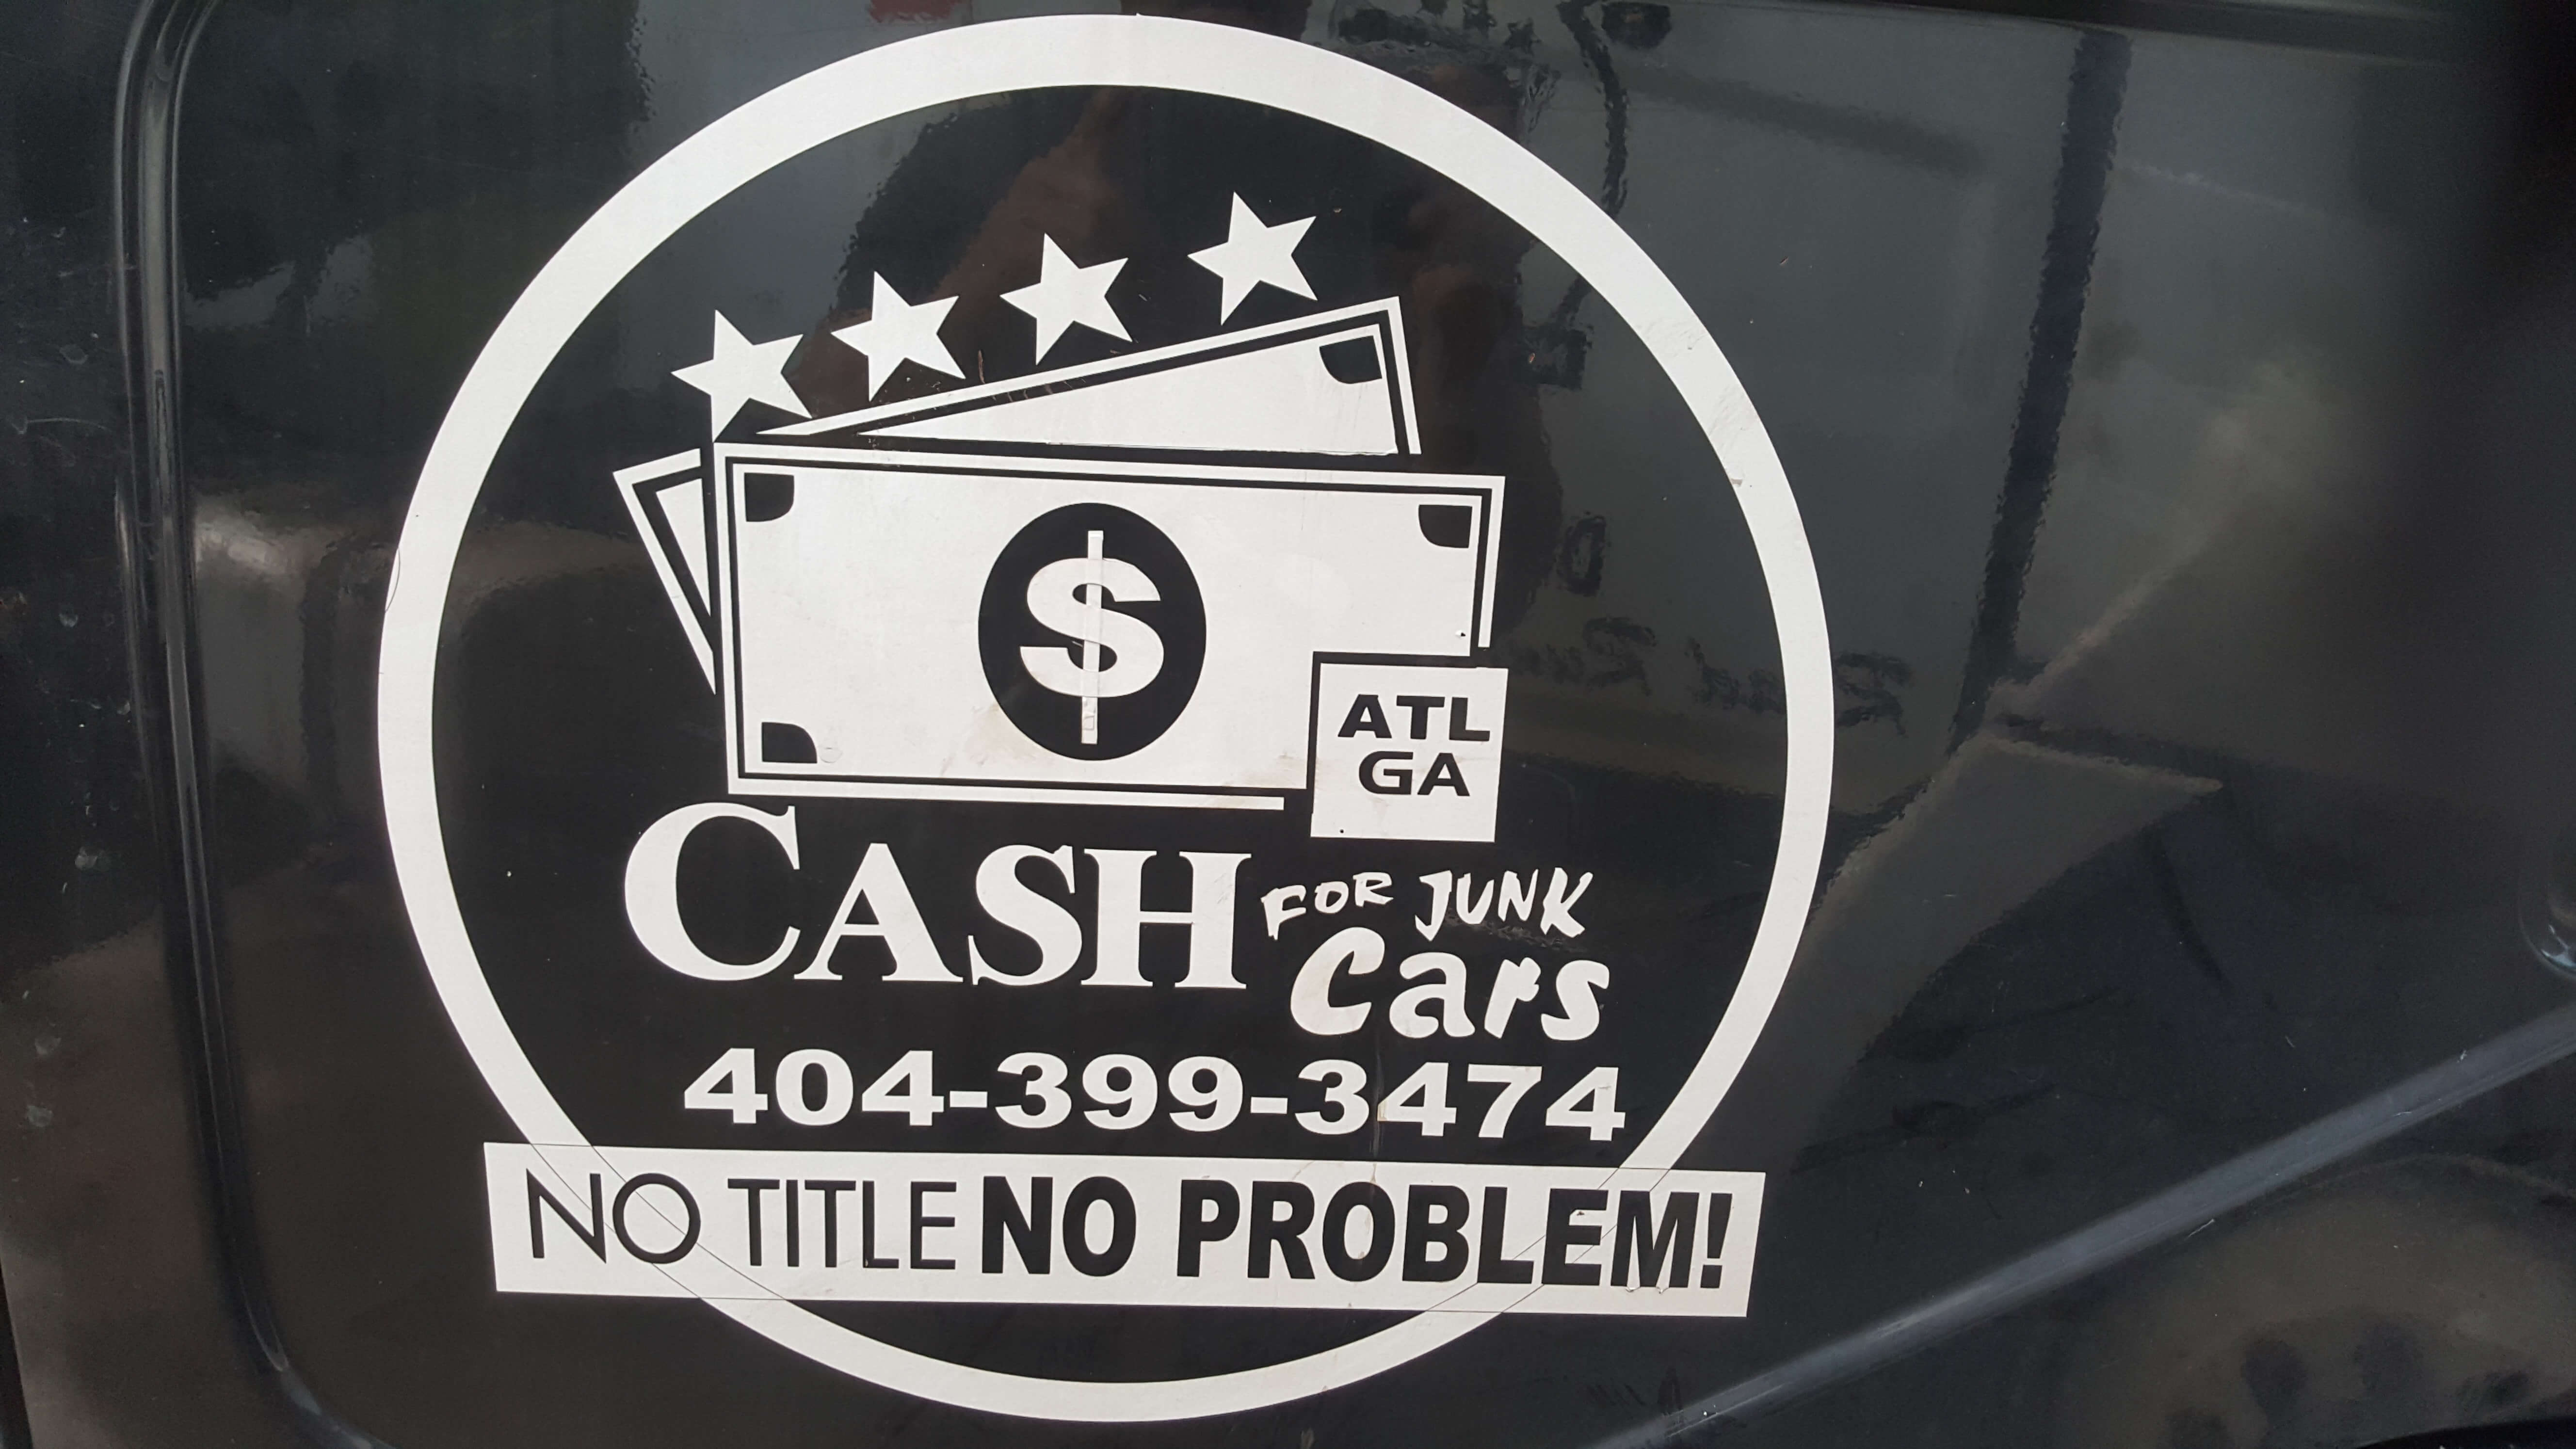 Car Crushers Cash For Junk Cars Atlanta W/o Titles 404-399-3474 - 